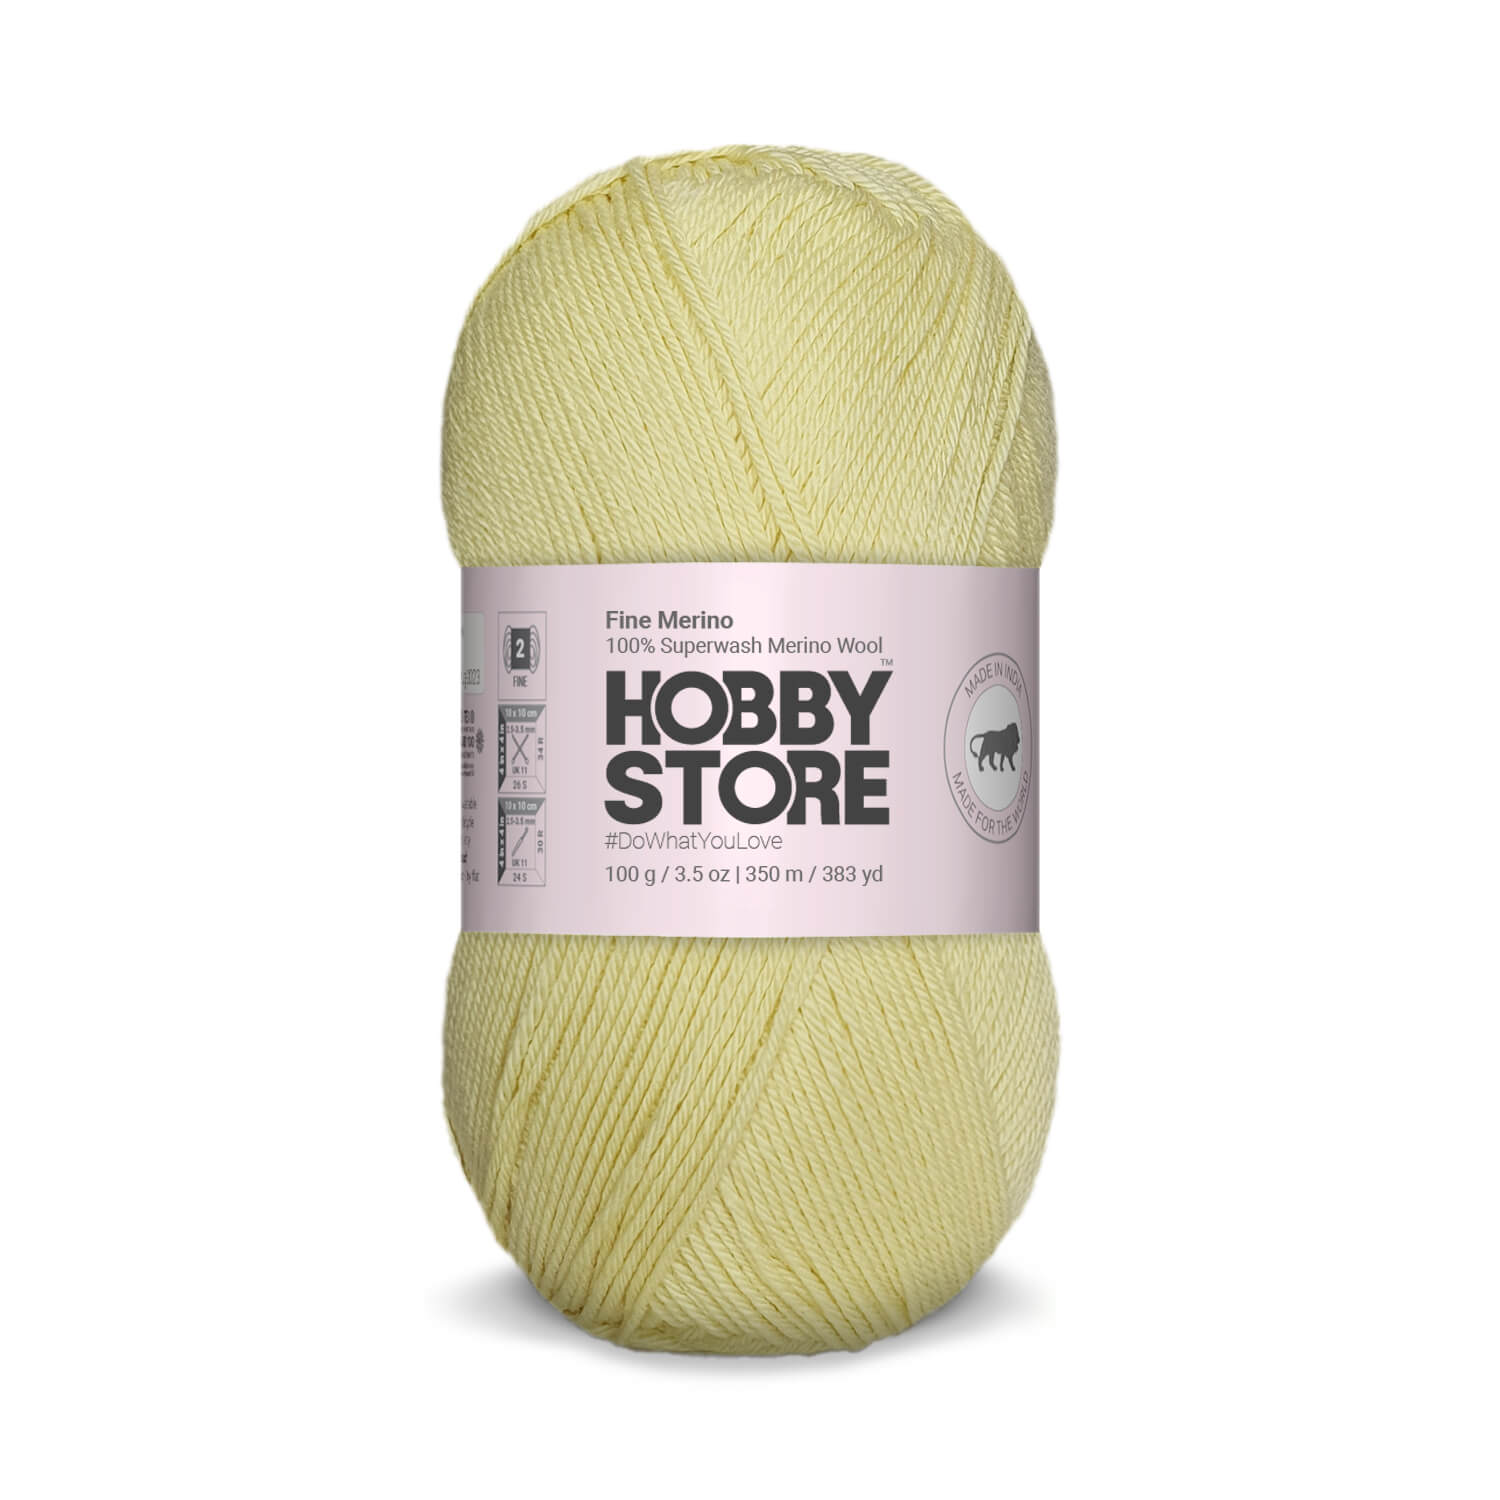 Fine Merino Wool by Hobby Store - Lemonade FM025